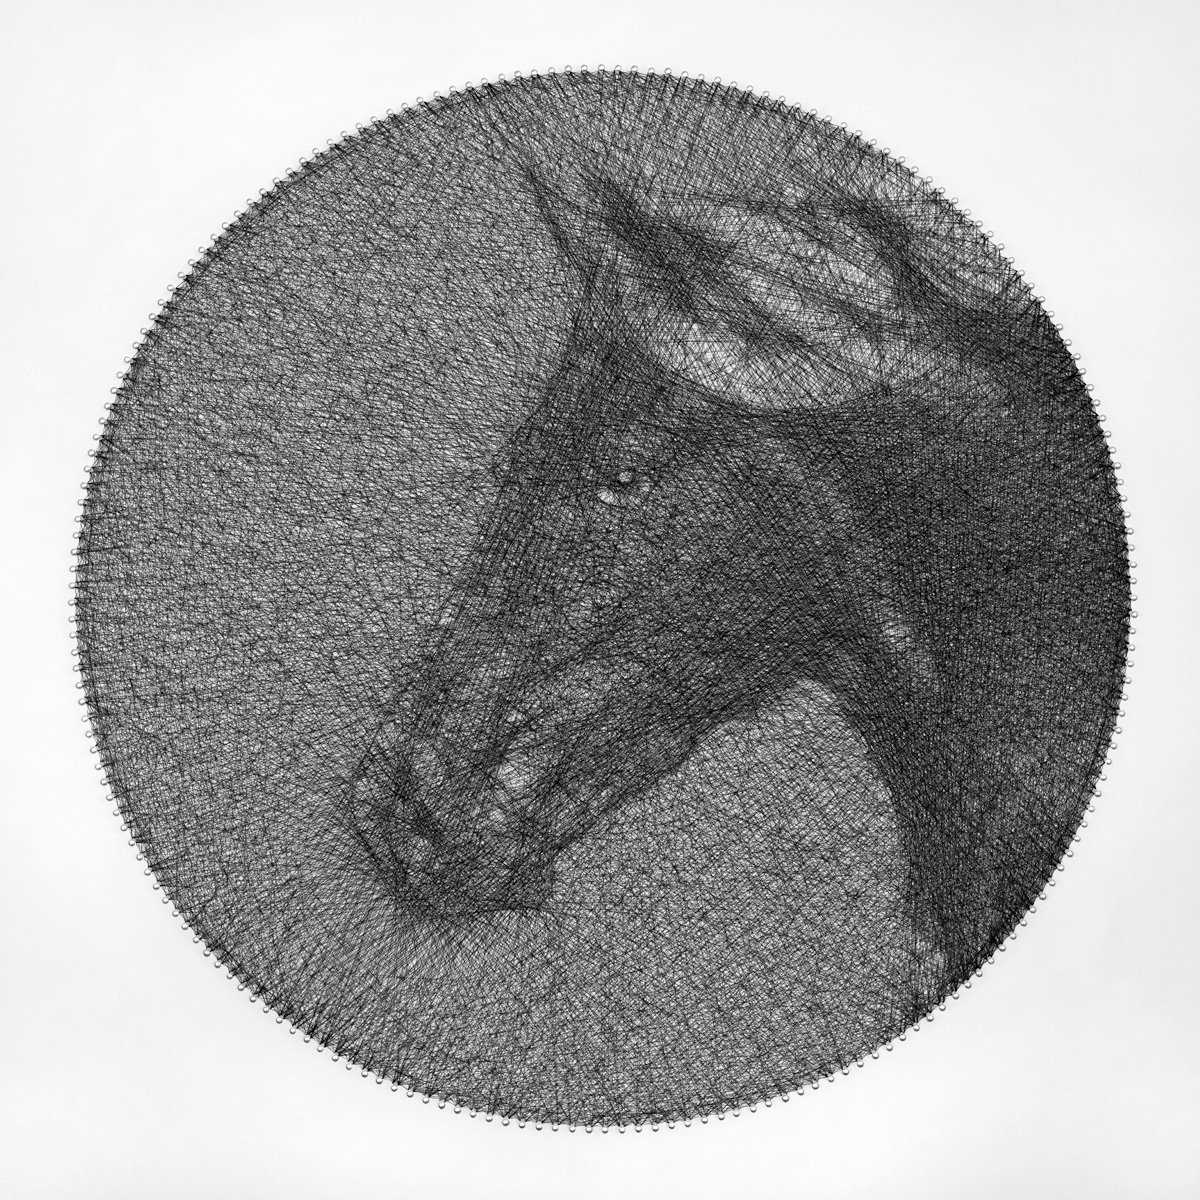 Black Horse Sring Art by Andrey Saharov